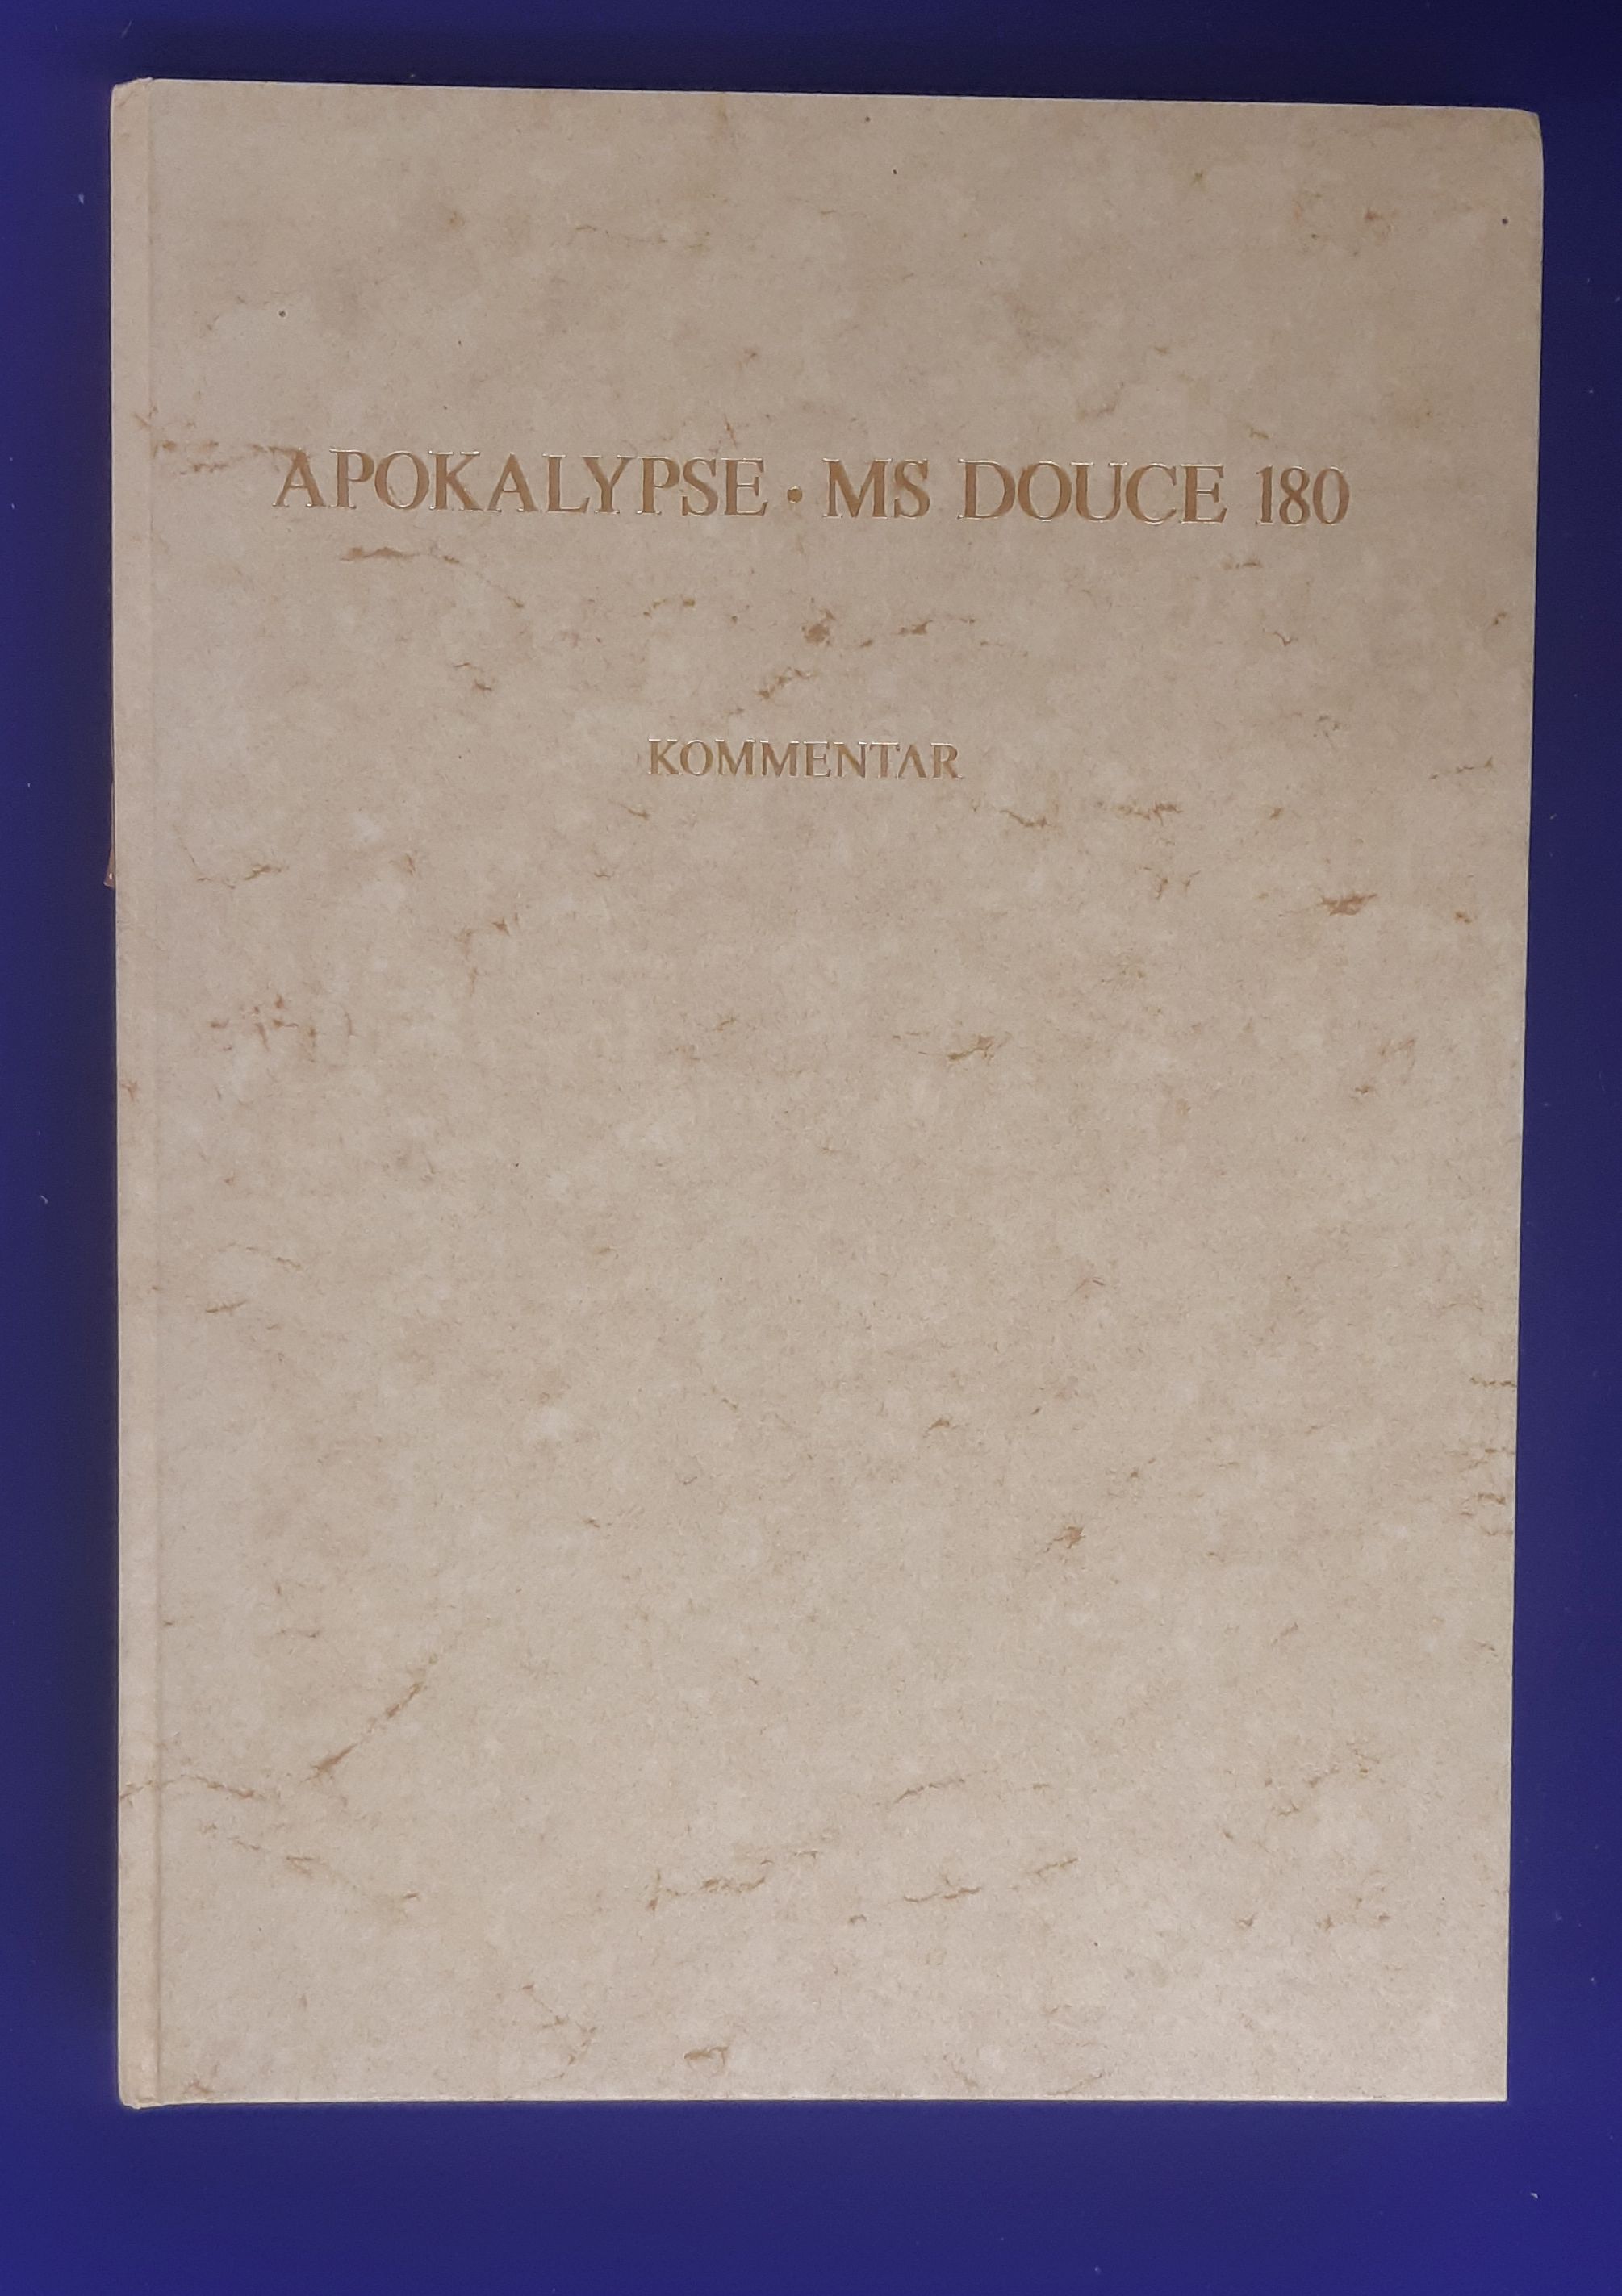 Apokalypse Ms Douce 180 - Kommentar. [Commentary volume only ] - Klein, P.K.